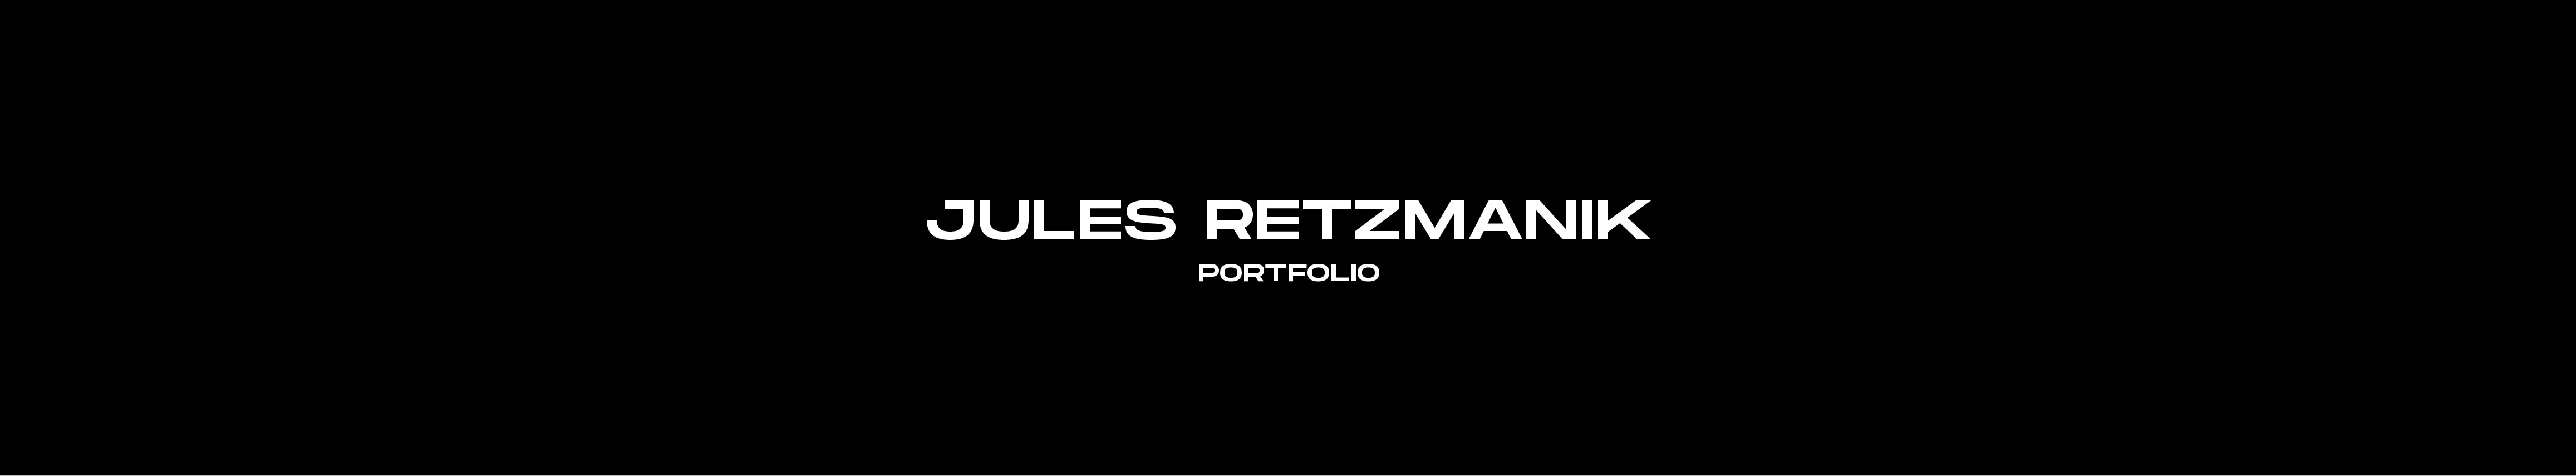 Jules Retzmanik's profile banner